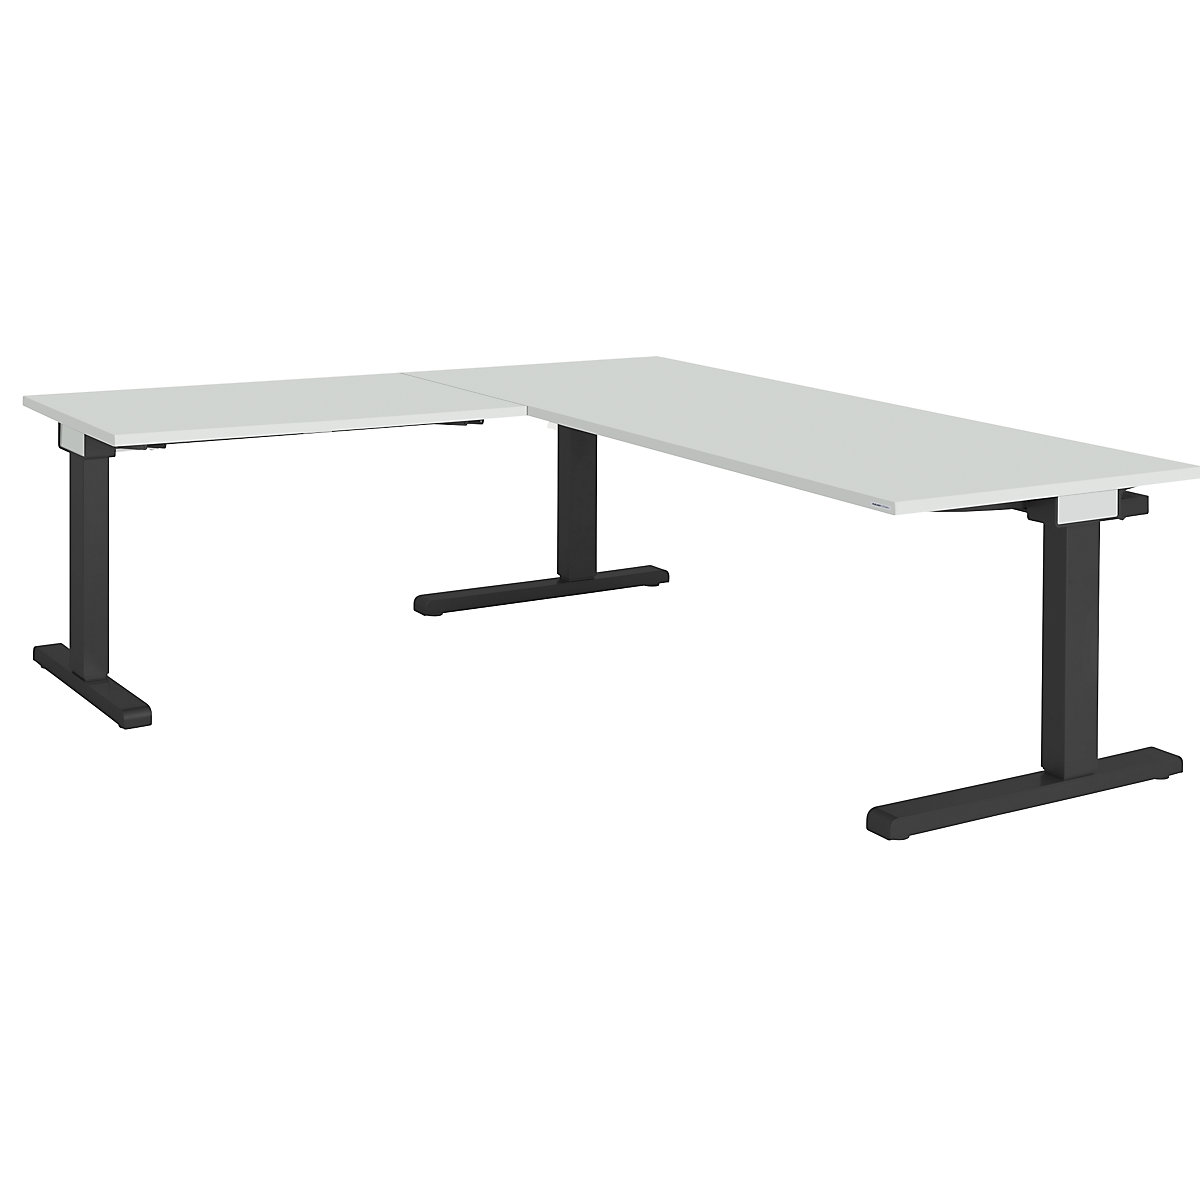 Desk, interlinked – mauser, WxD 1800 x 800 mm, angled extension on left (width 1000 mm), light grey top, charcoal frame-2